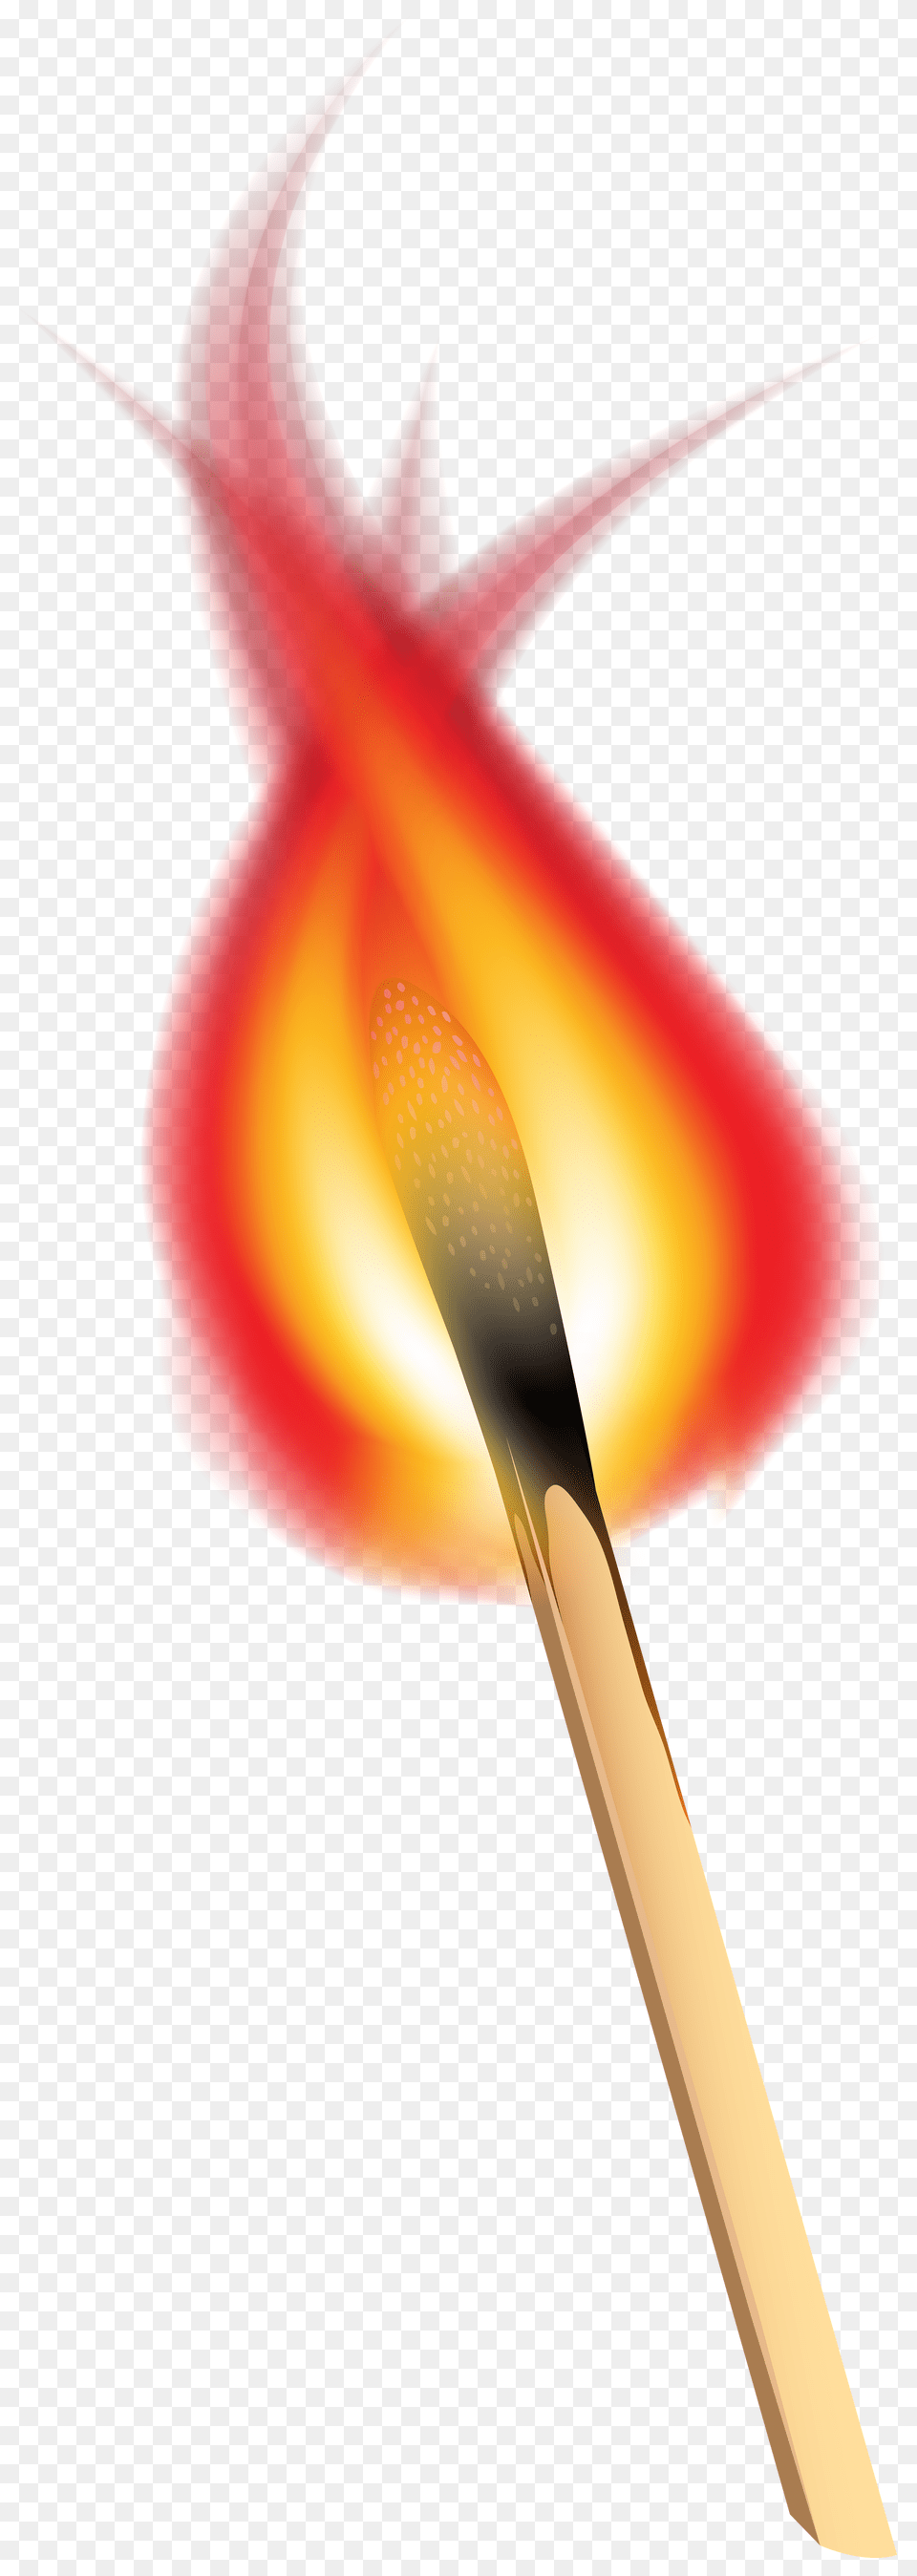 Burning Match Clip Art, Fire, Flame Free Transparent Png